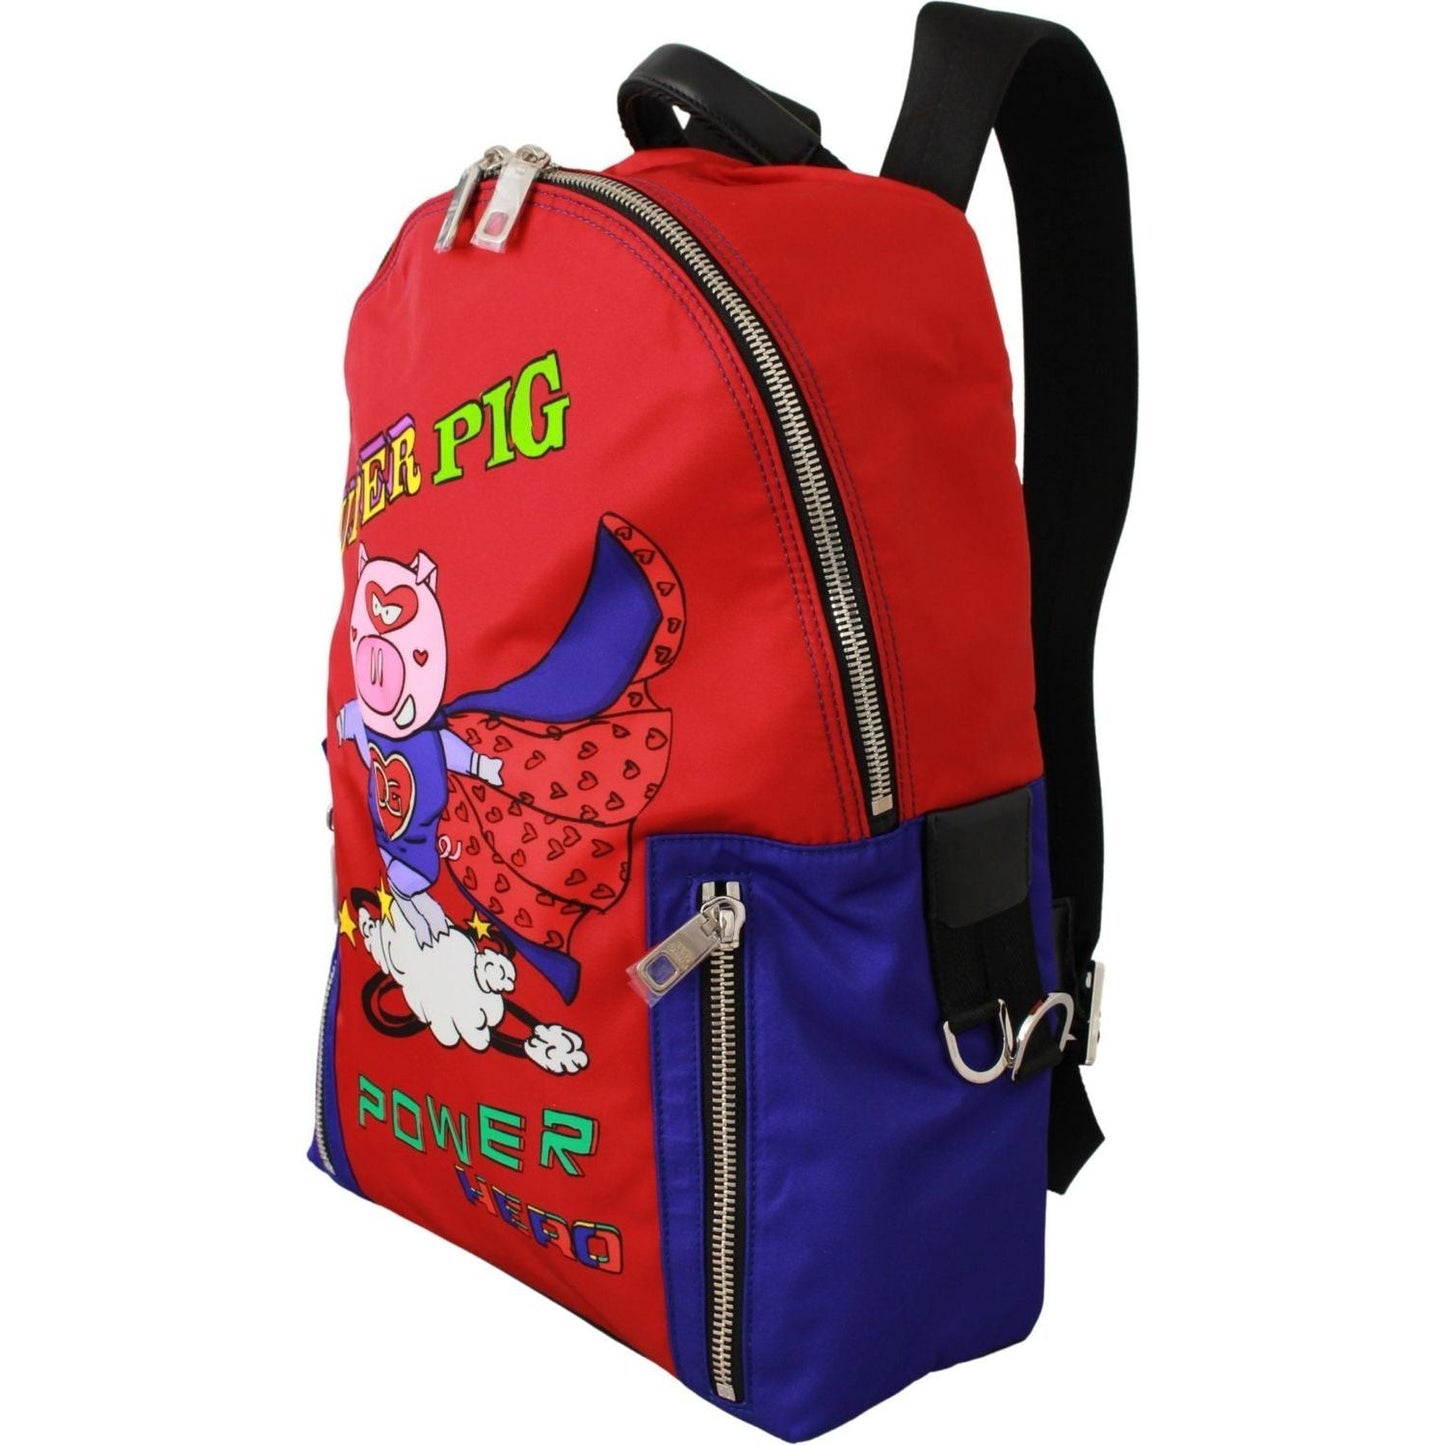 Dolce & Gabbana Vibrant Red Multicolor Print Men's Backpack Backpack nylon-multicolor-super-pig-print-men-school-bag IMG_4824-scaled-22aaef6d-843.jpg